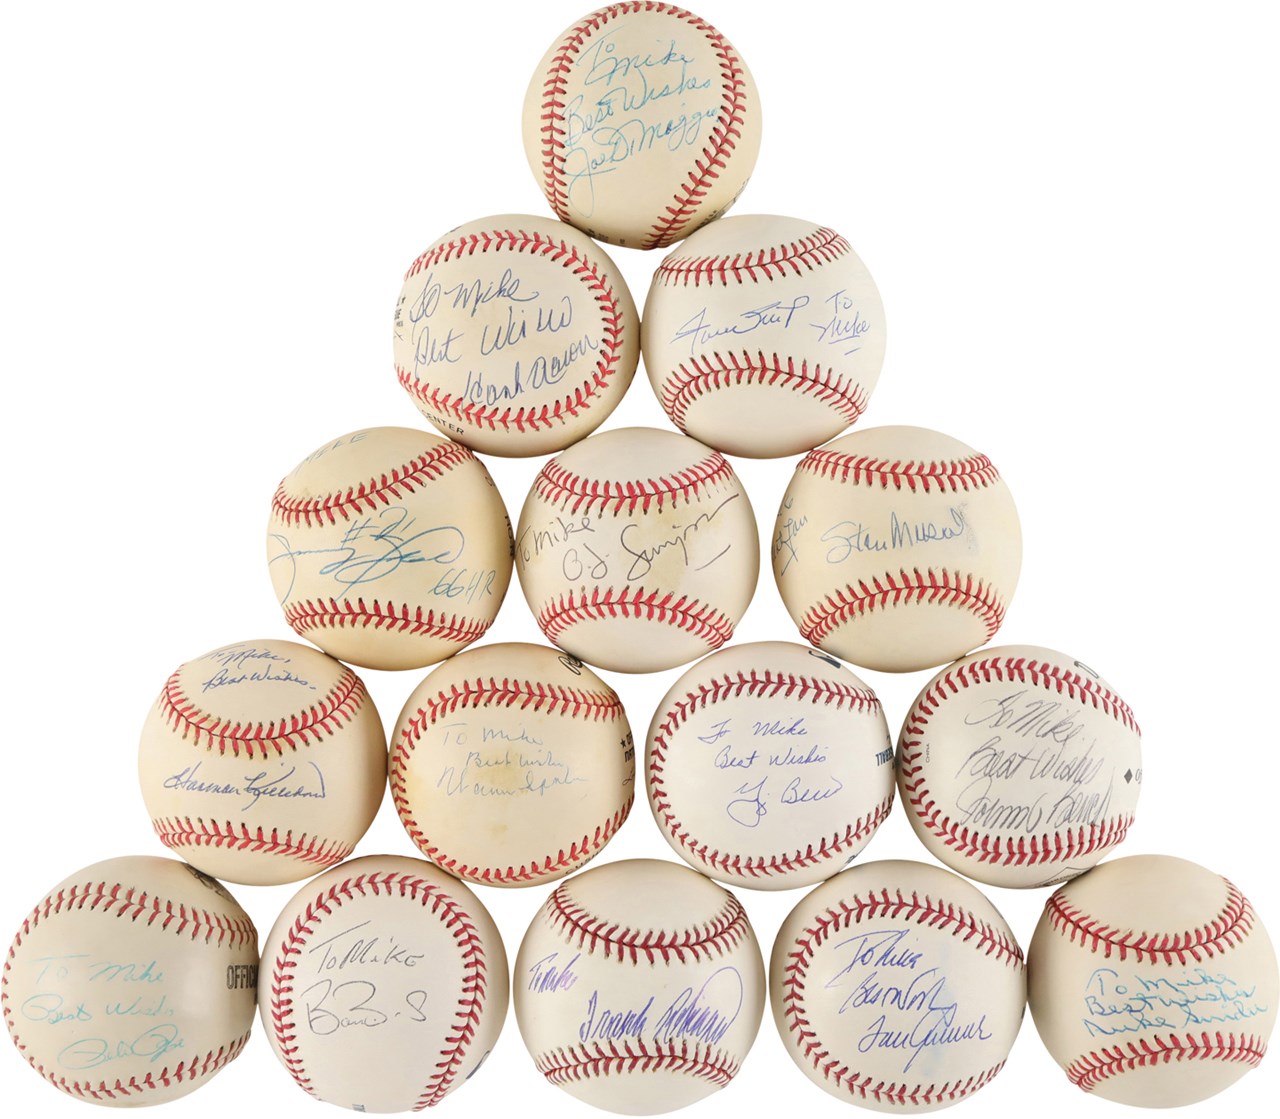 Baseball Autographs - Signed Baseballs Personalized to Mike (30)